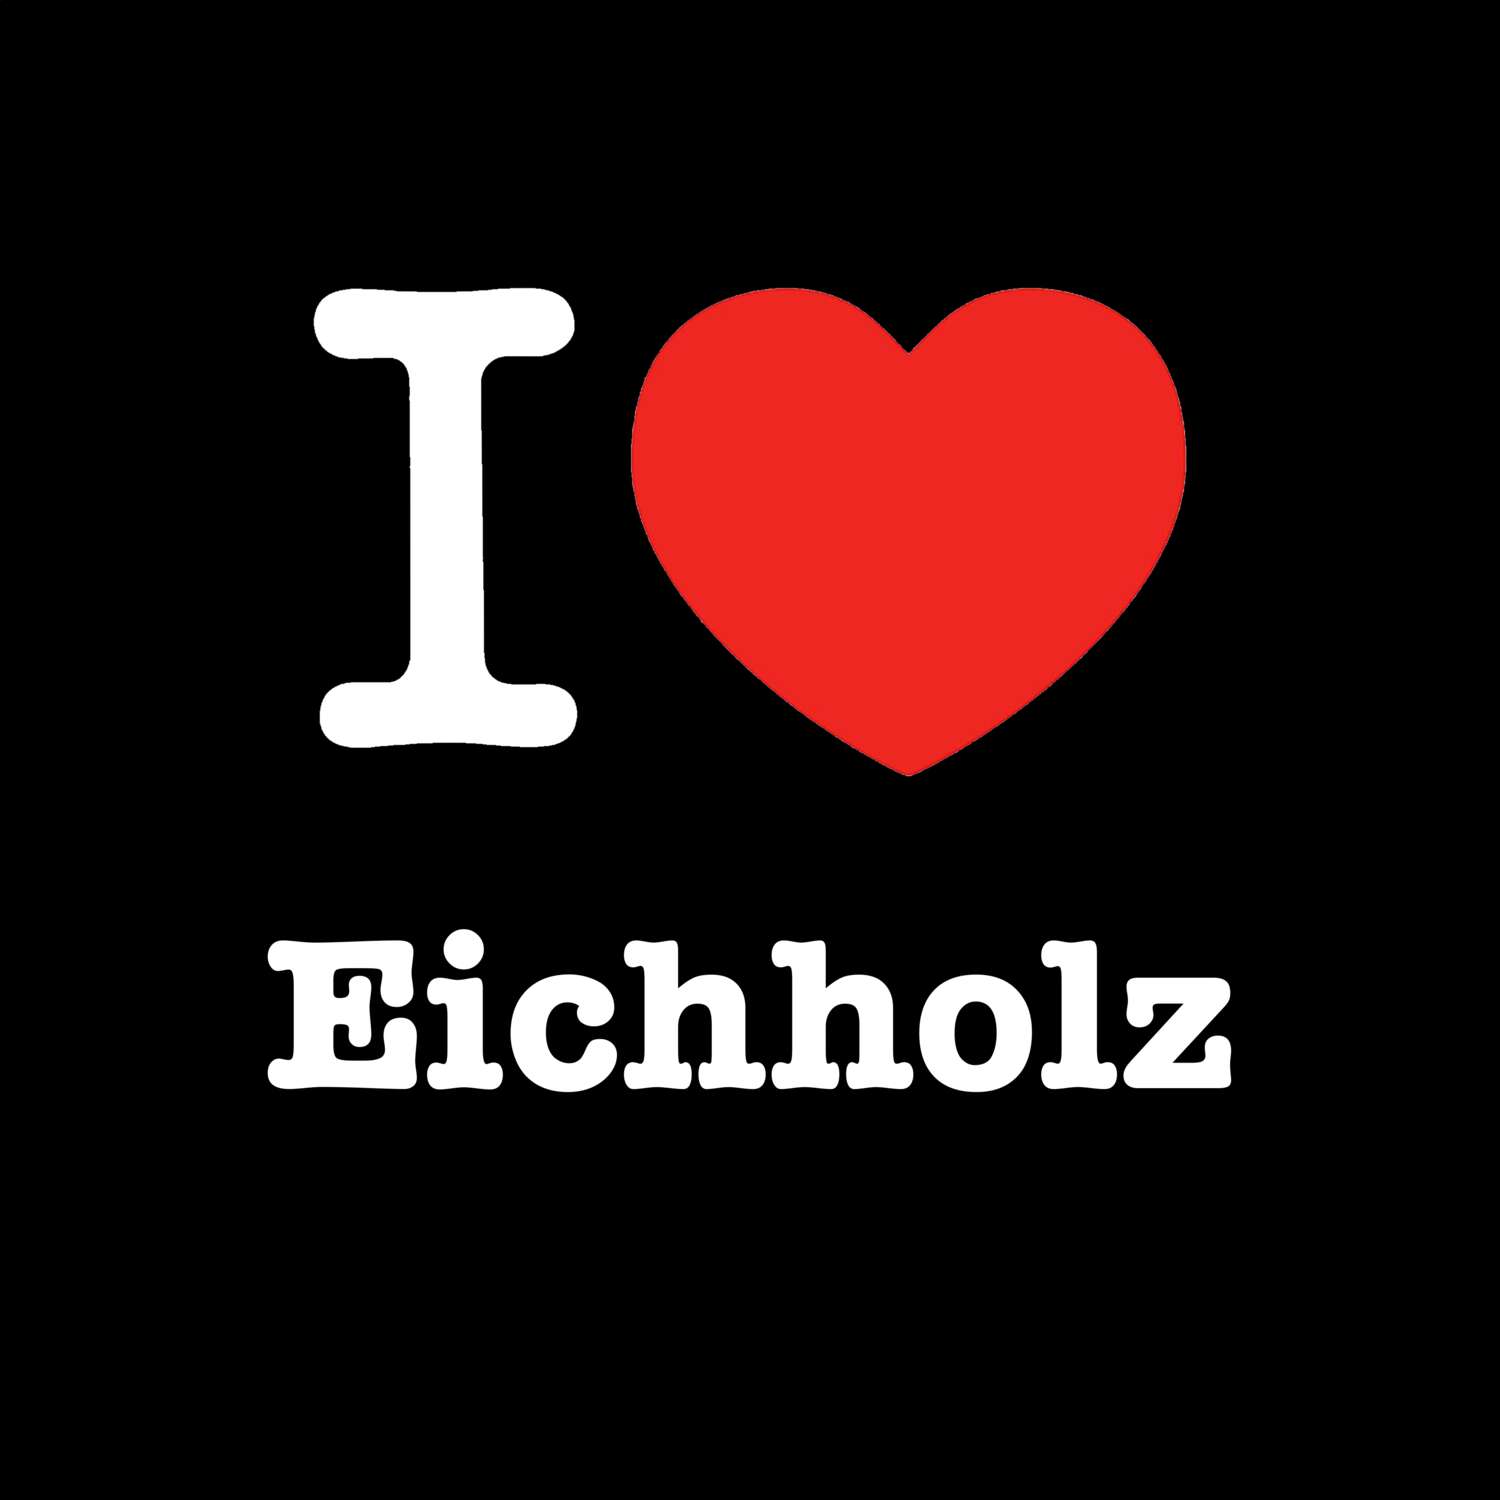 Eichholz T-Shirt »I love«